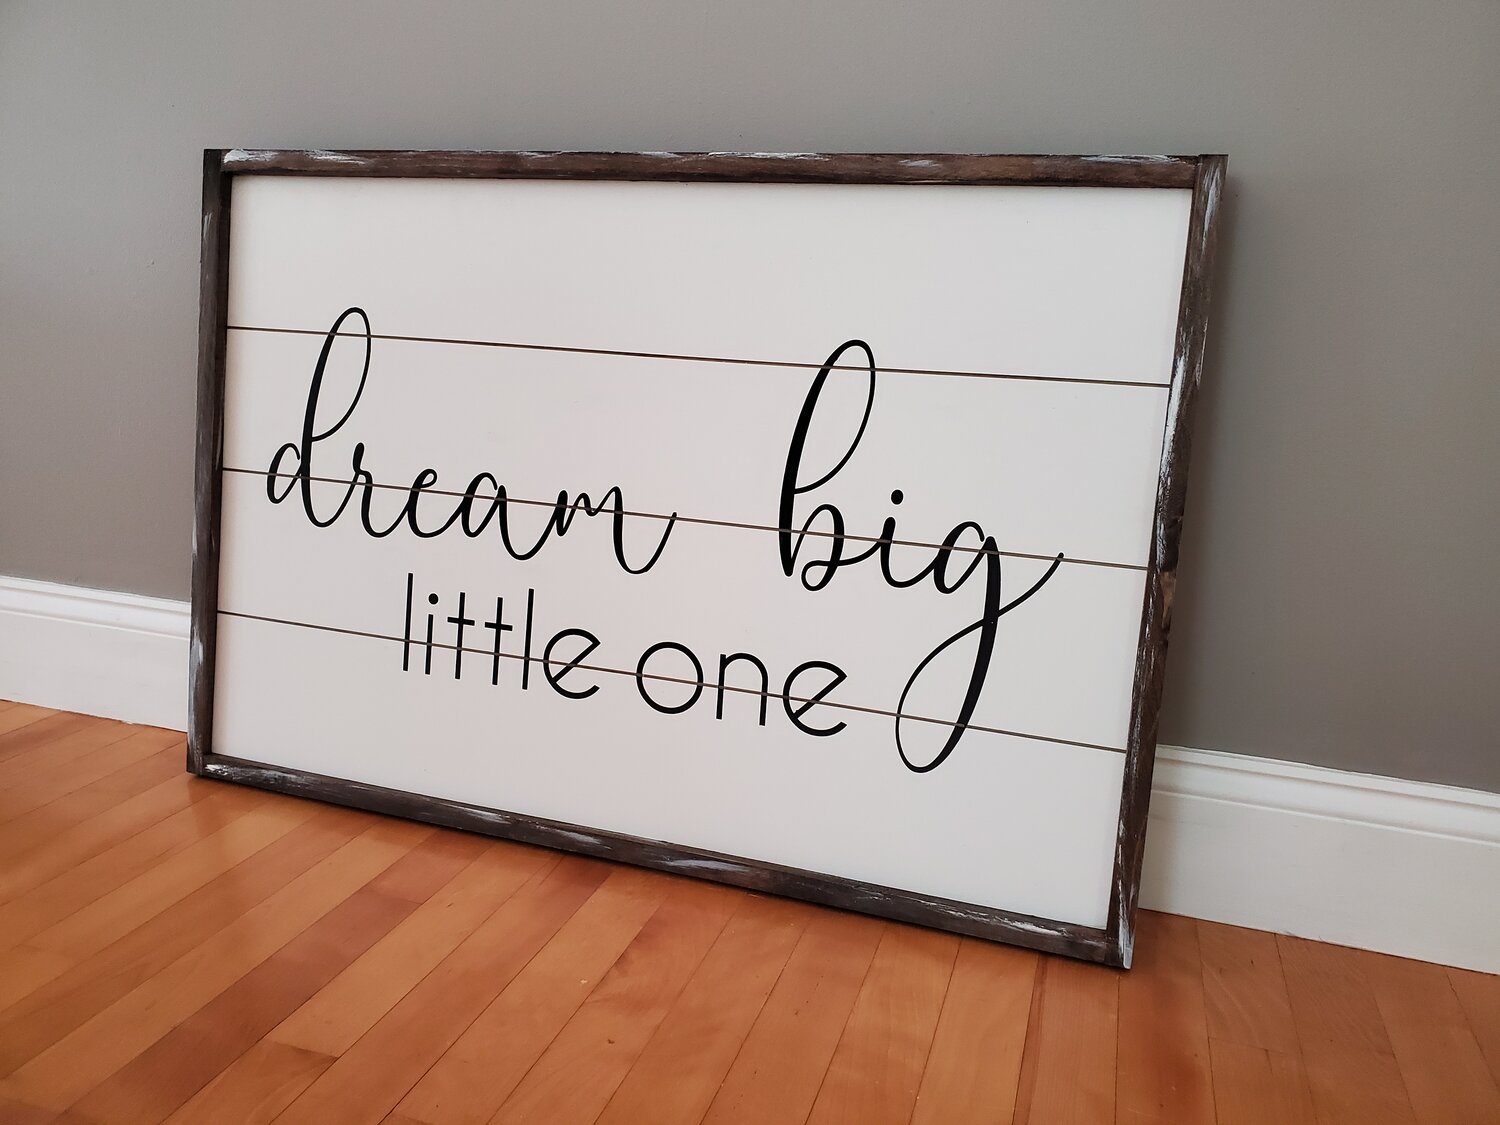 Dream Big Little One, 11x21 inch Wood Sign